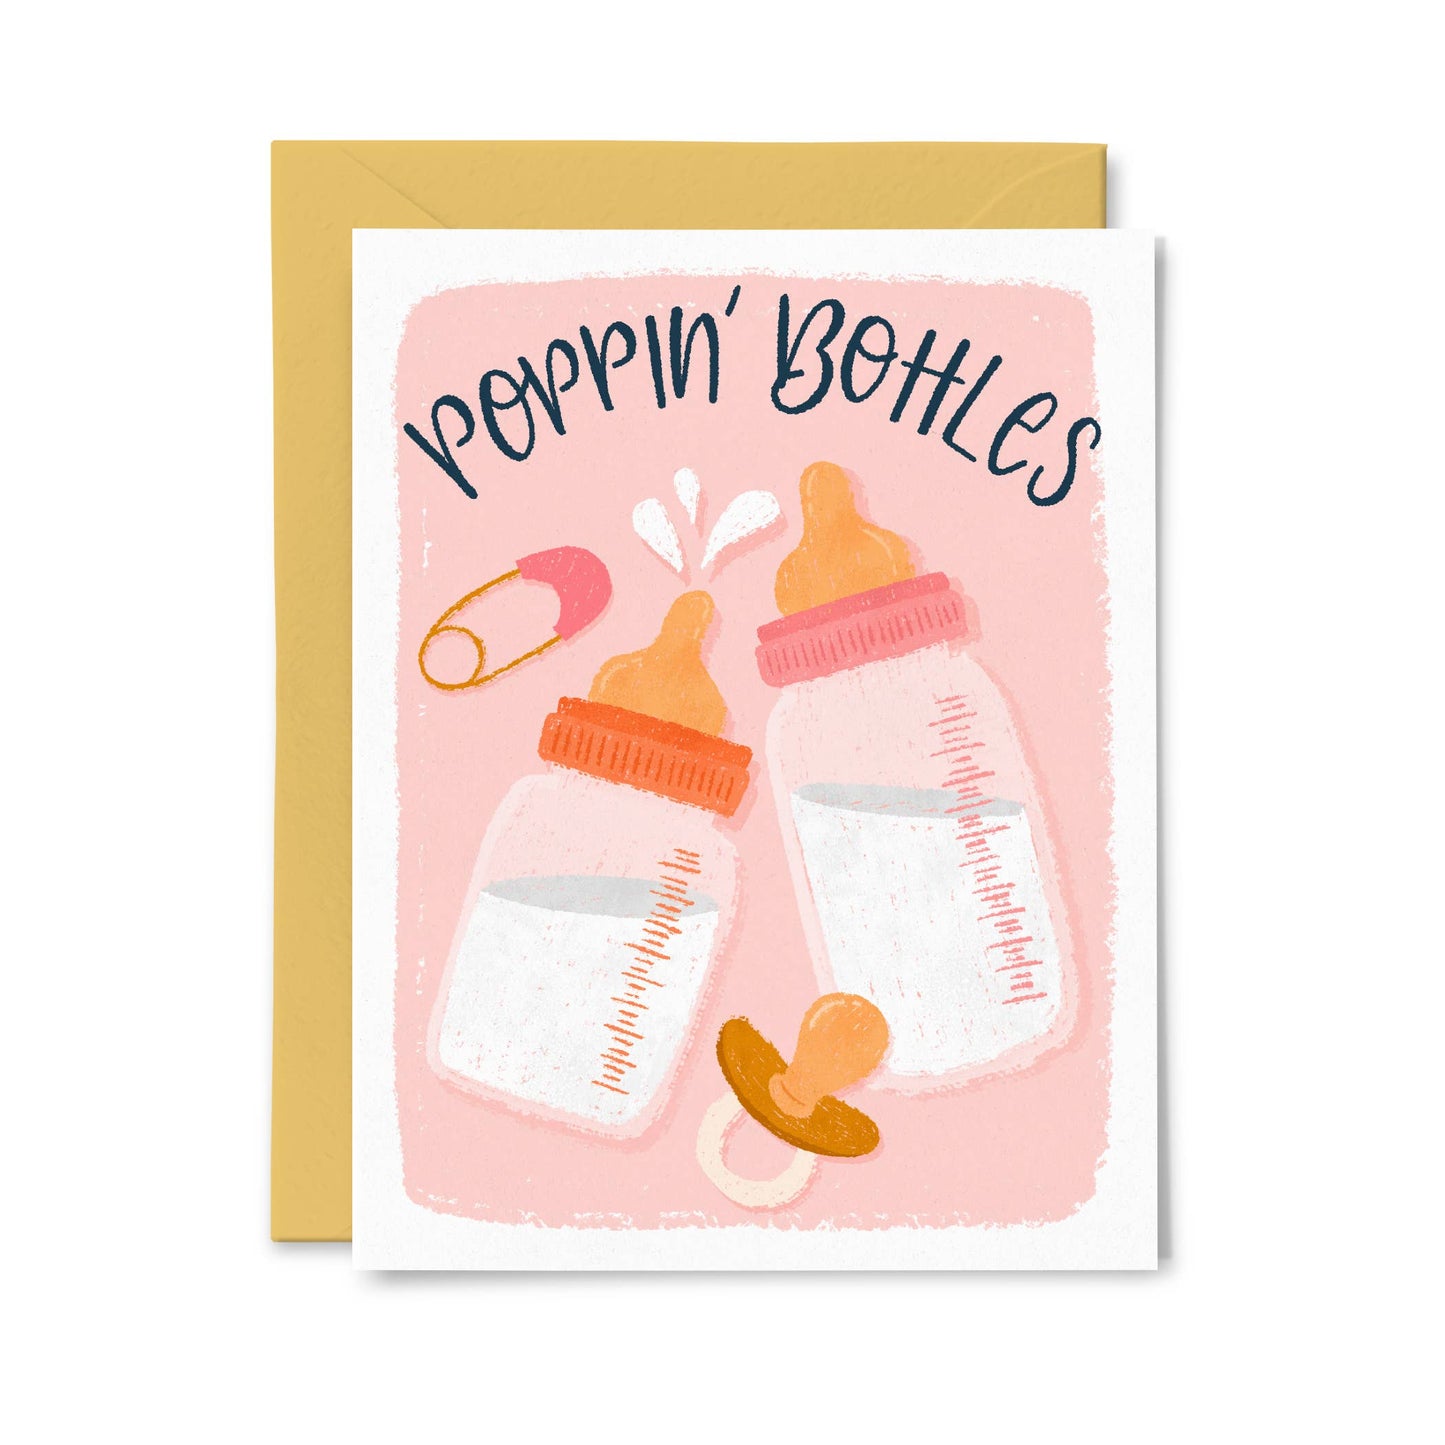 Poppin' Bottles New Baby Card